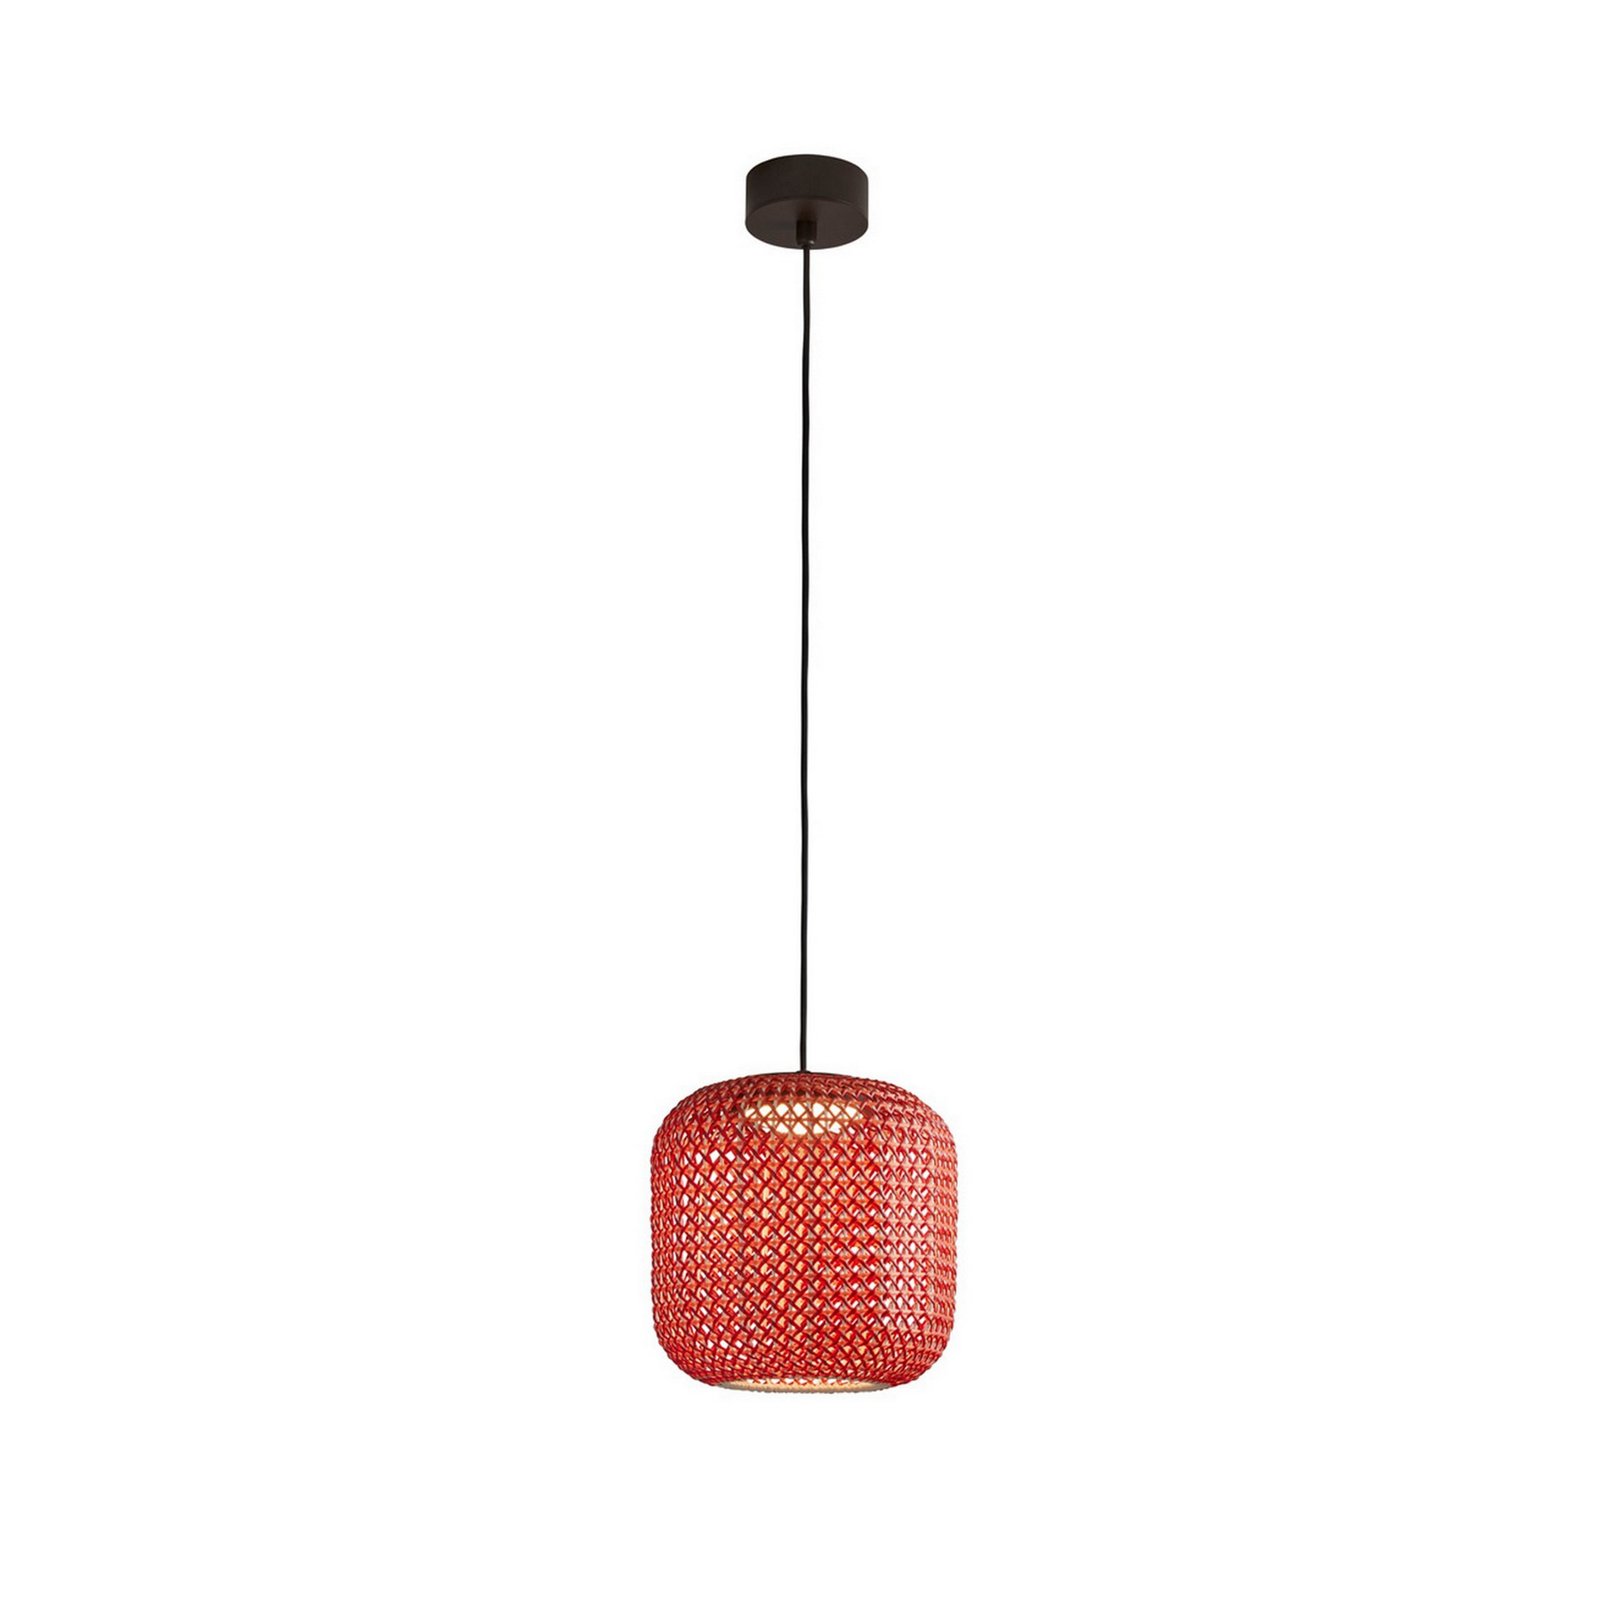 Bover Nans S/31 LED outdoor hanging light, red